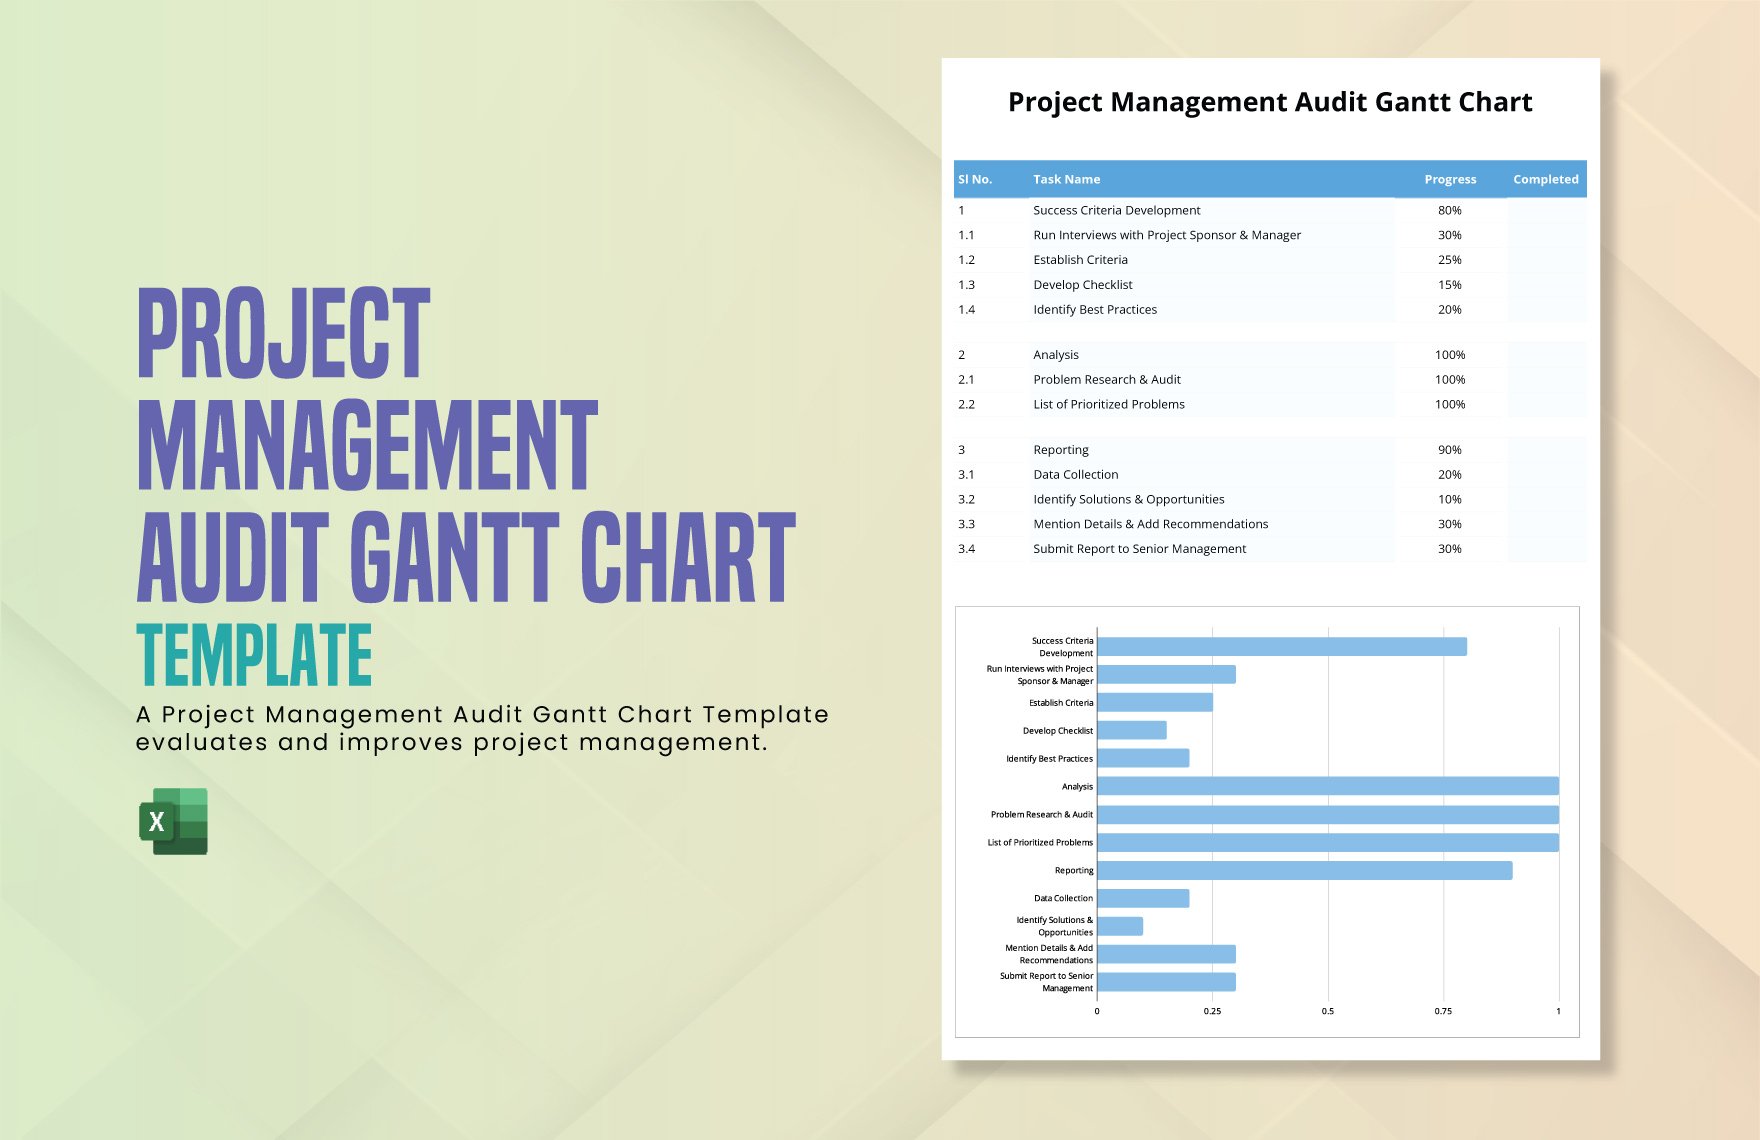 Project Management Audit Gantt Chart Template in Excel